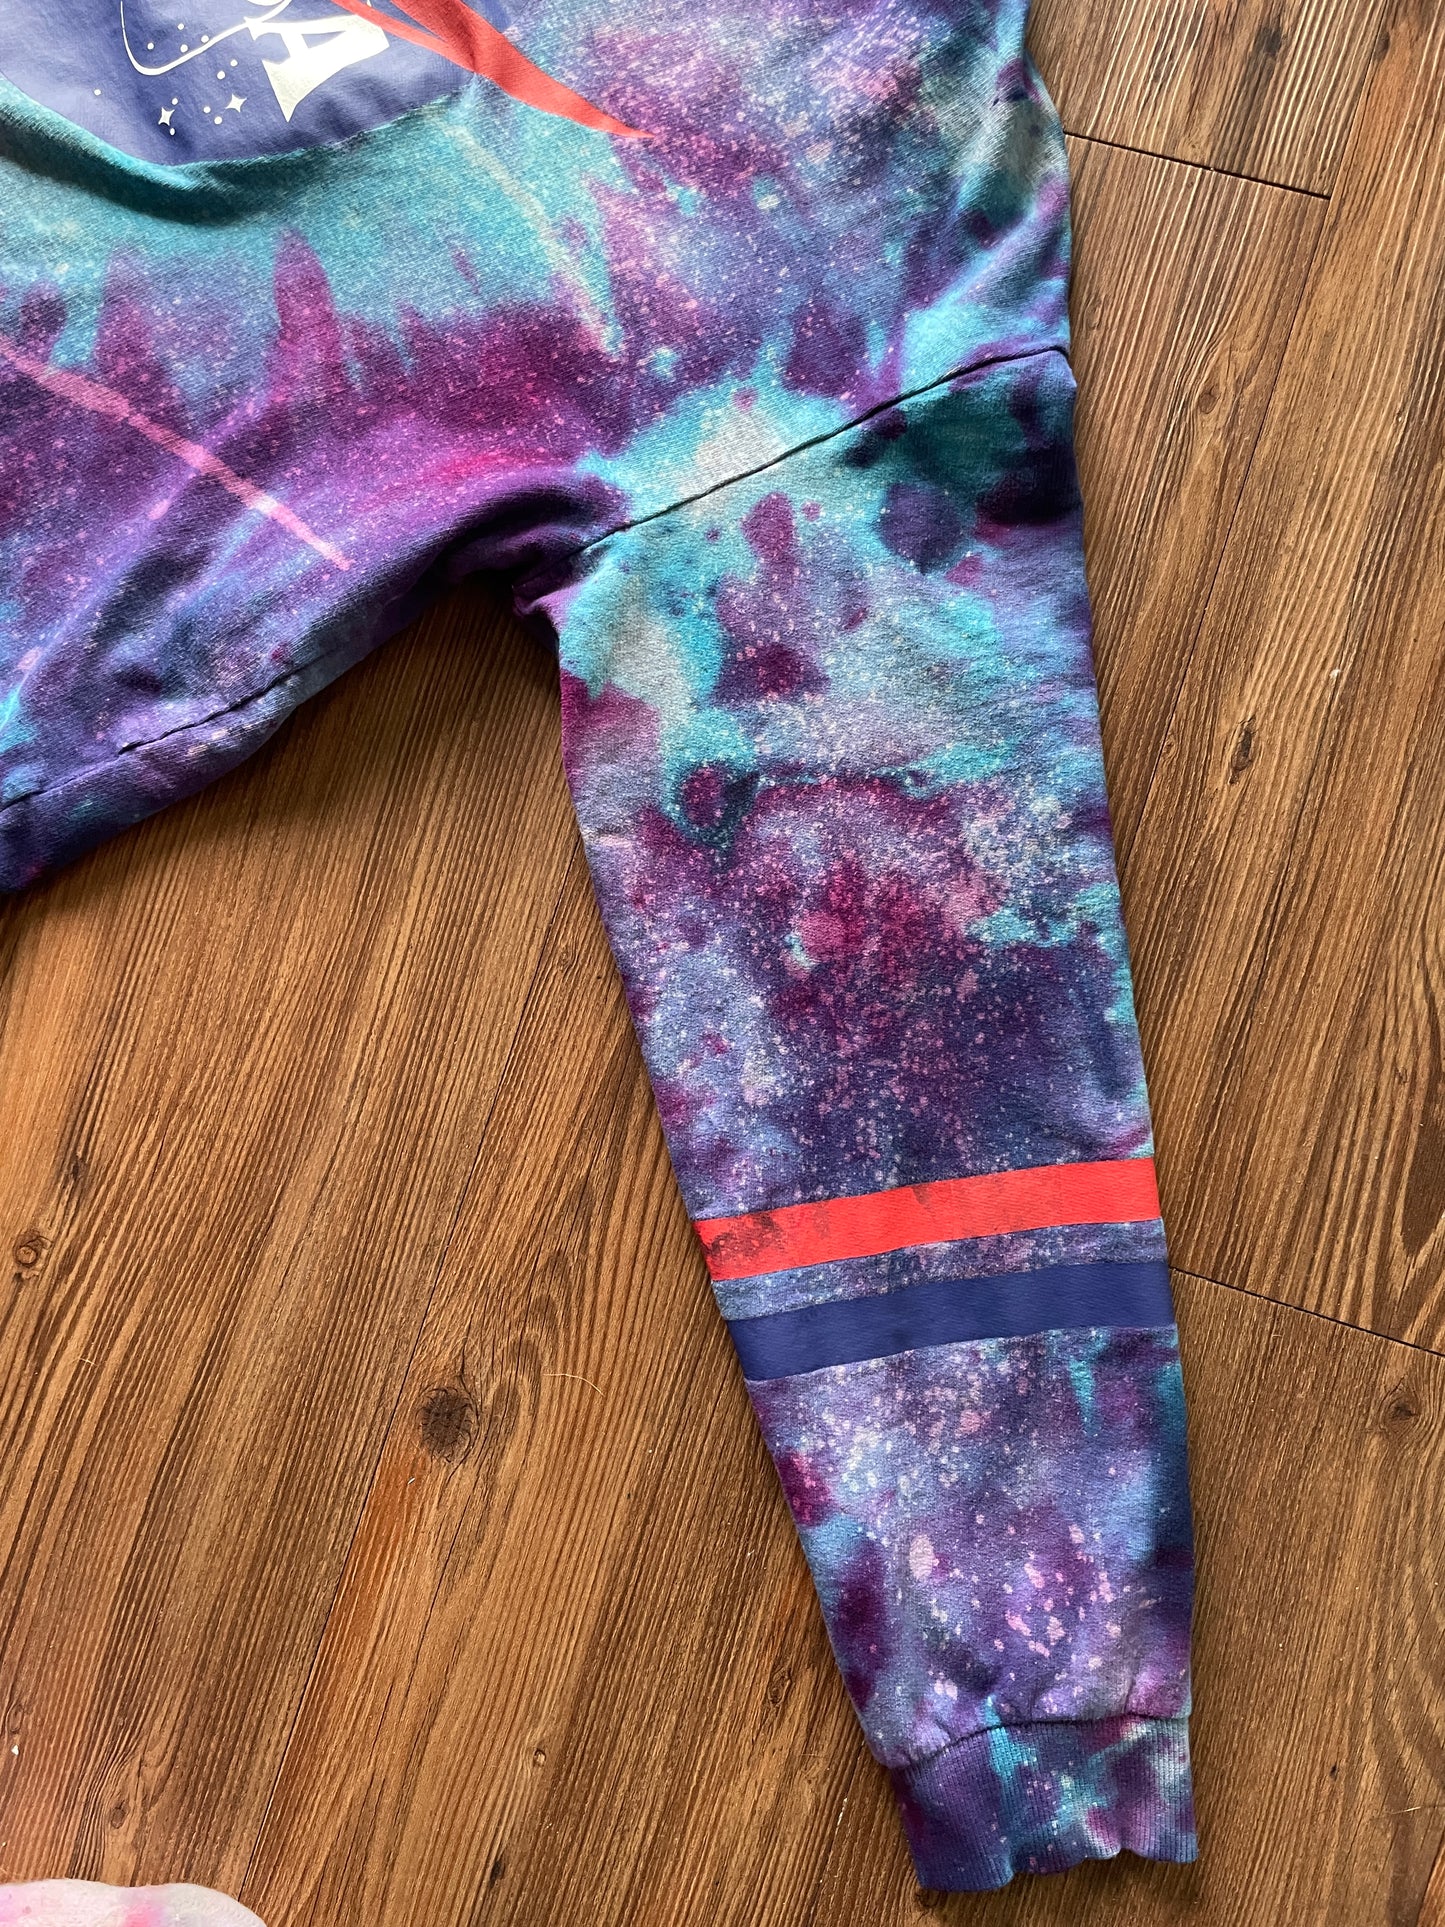 Large Women's NASA Handmade Tie Dye Cropped Sweatshirt | Blue, Purple, and Pink Galaxy Ice Dye Tie Dye Short Sleeve